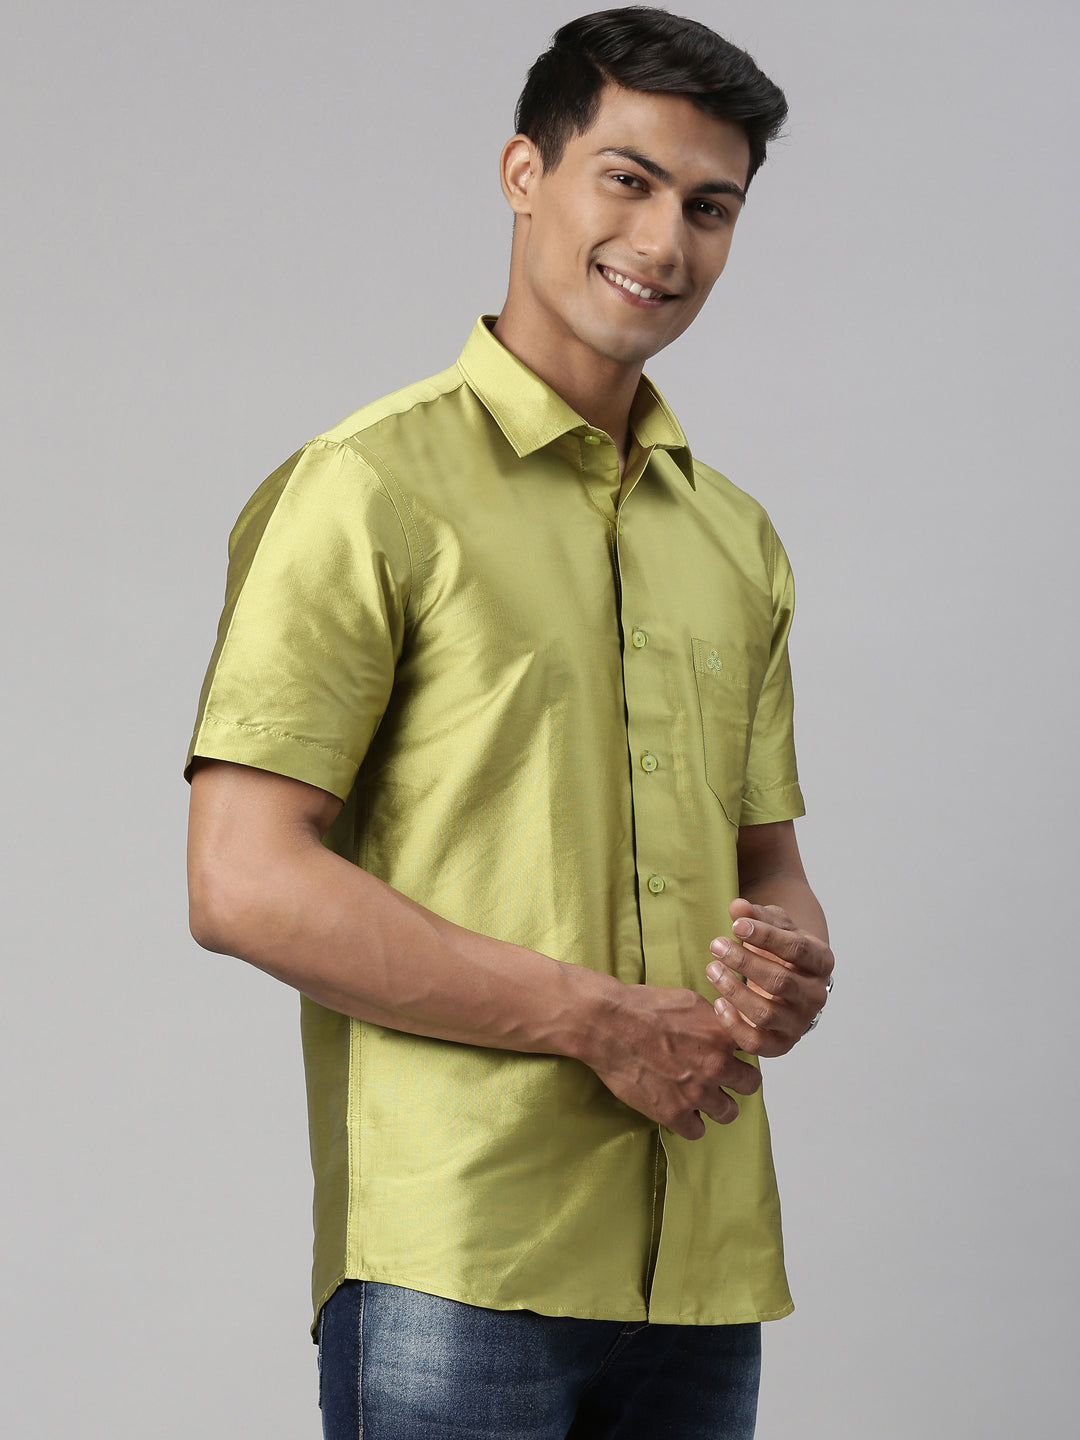 Tattva Green Colour Half sleeve Shirt